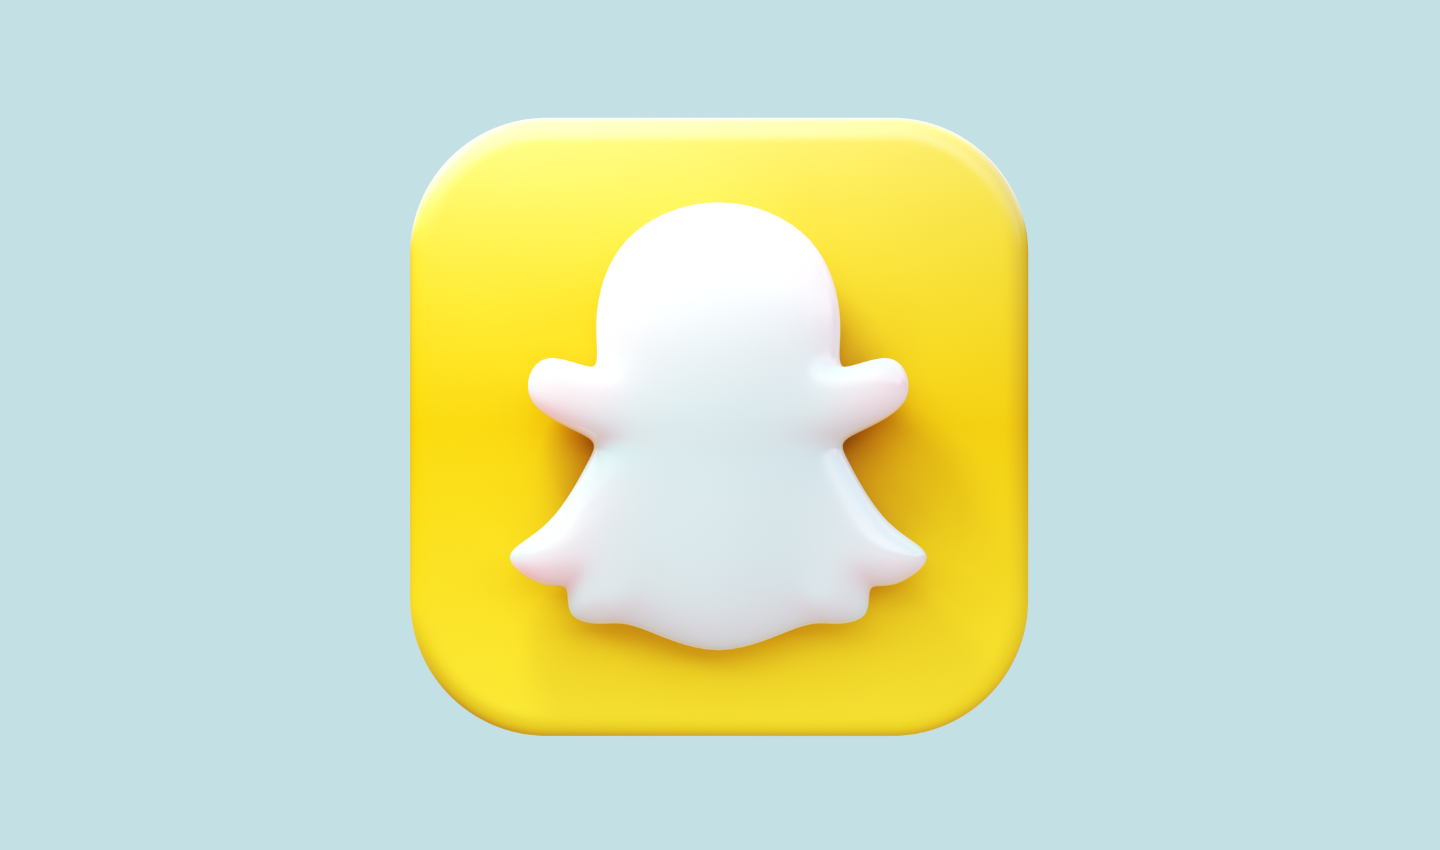 Snapchat's UI